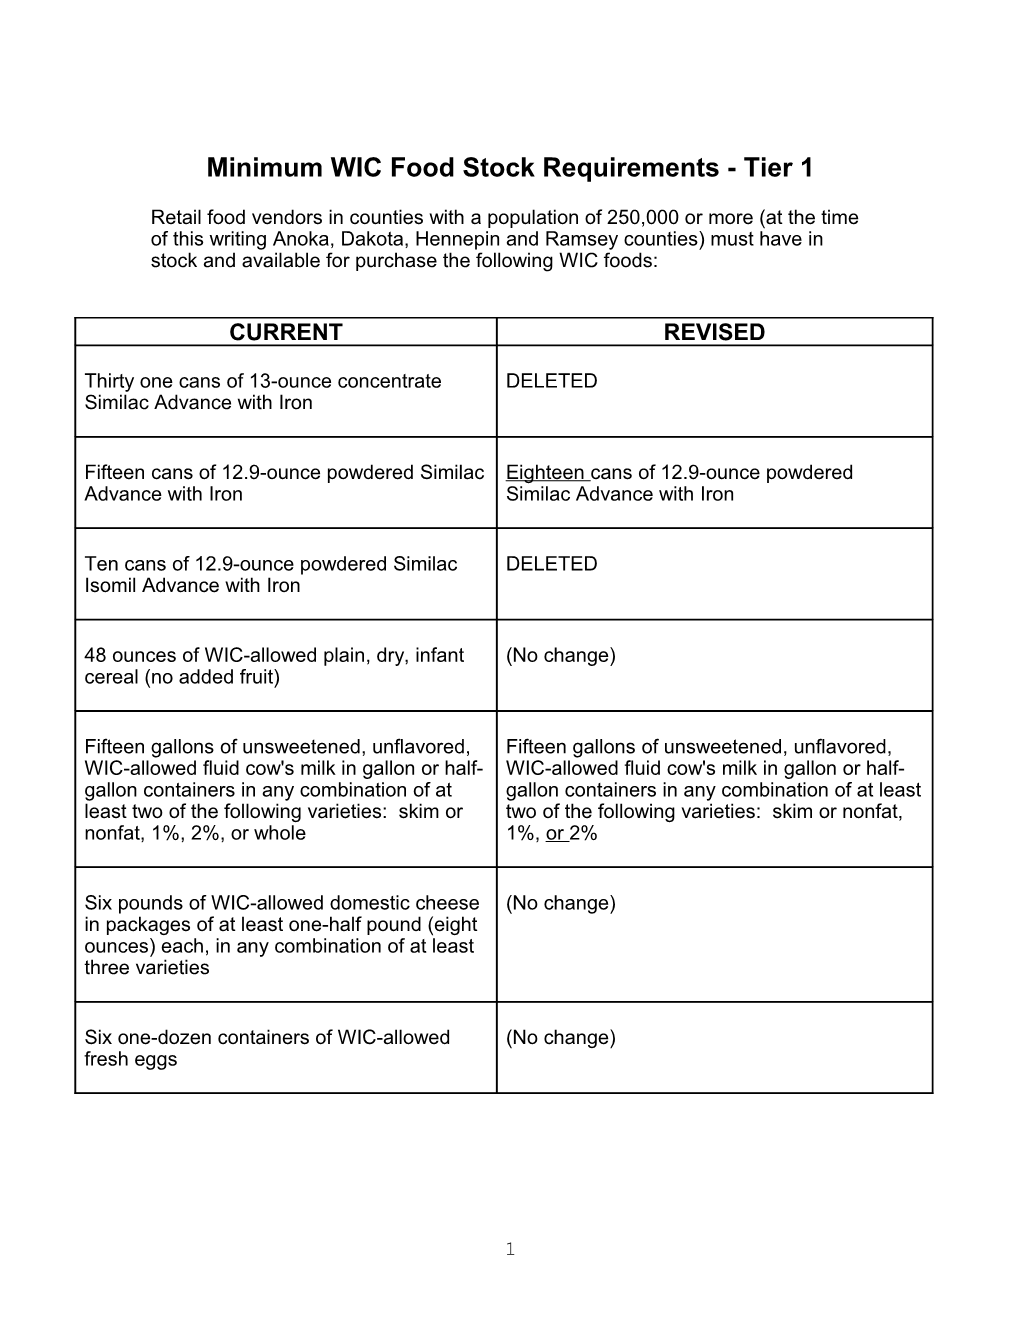 Minimum WIC Food Stock Requirements - Tier 2